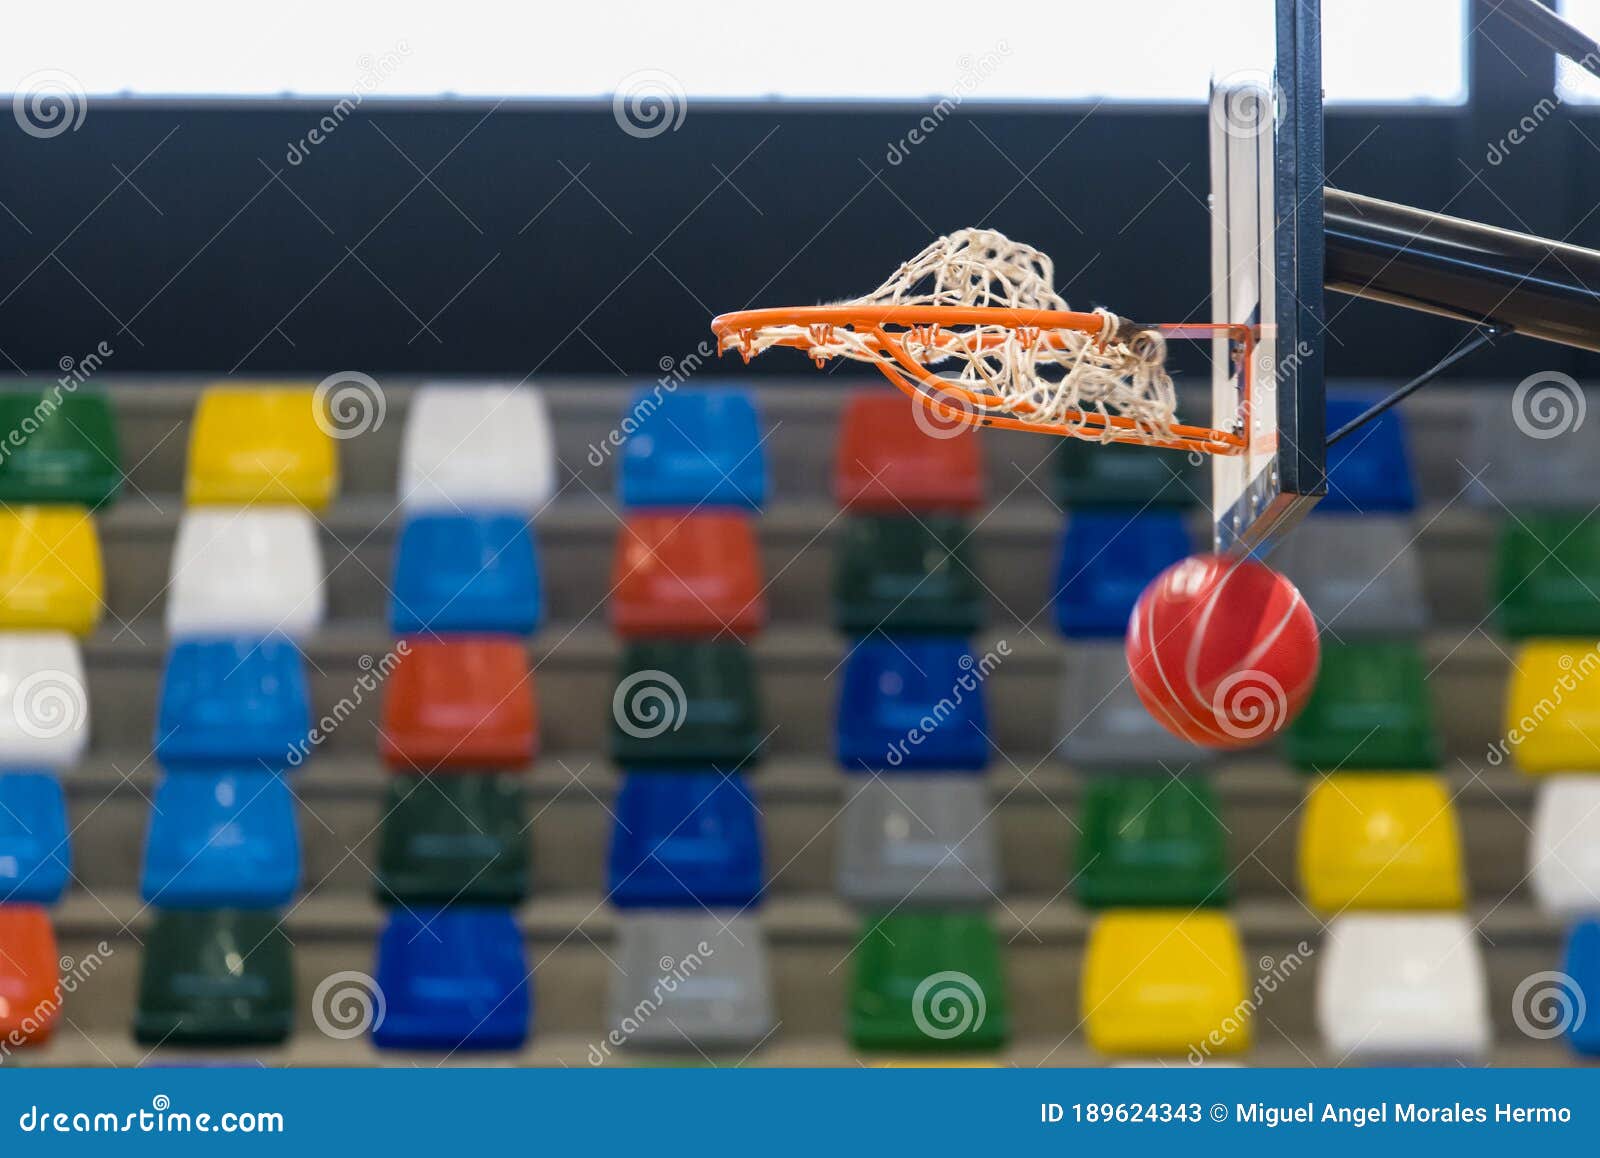 a red ball goes through a basketball basket